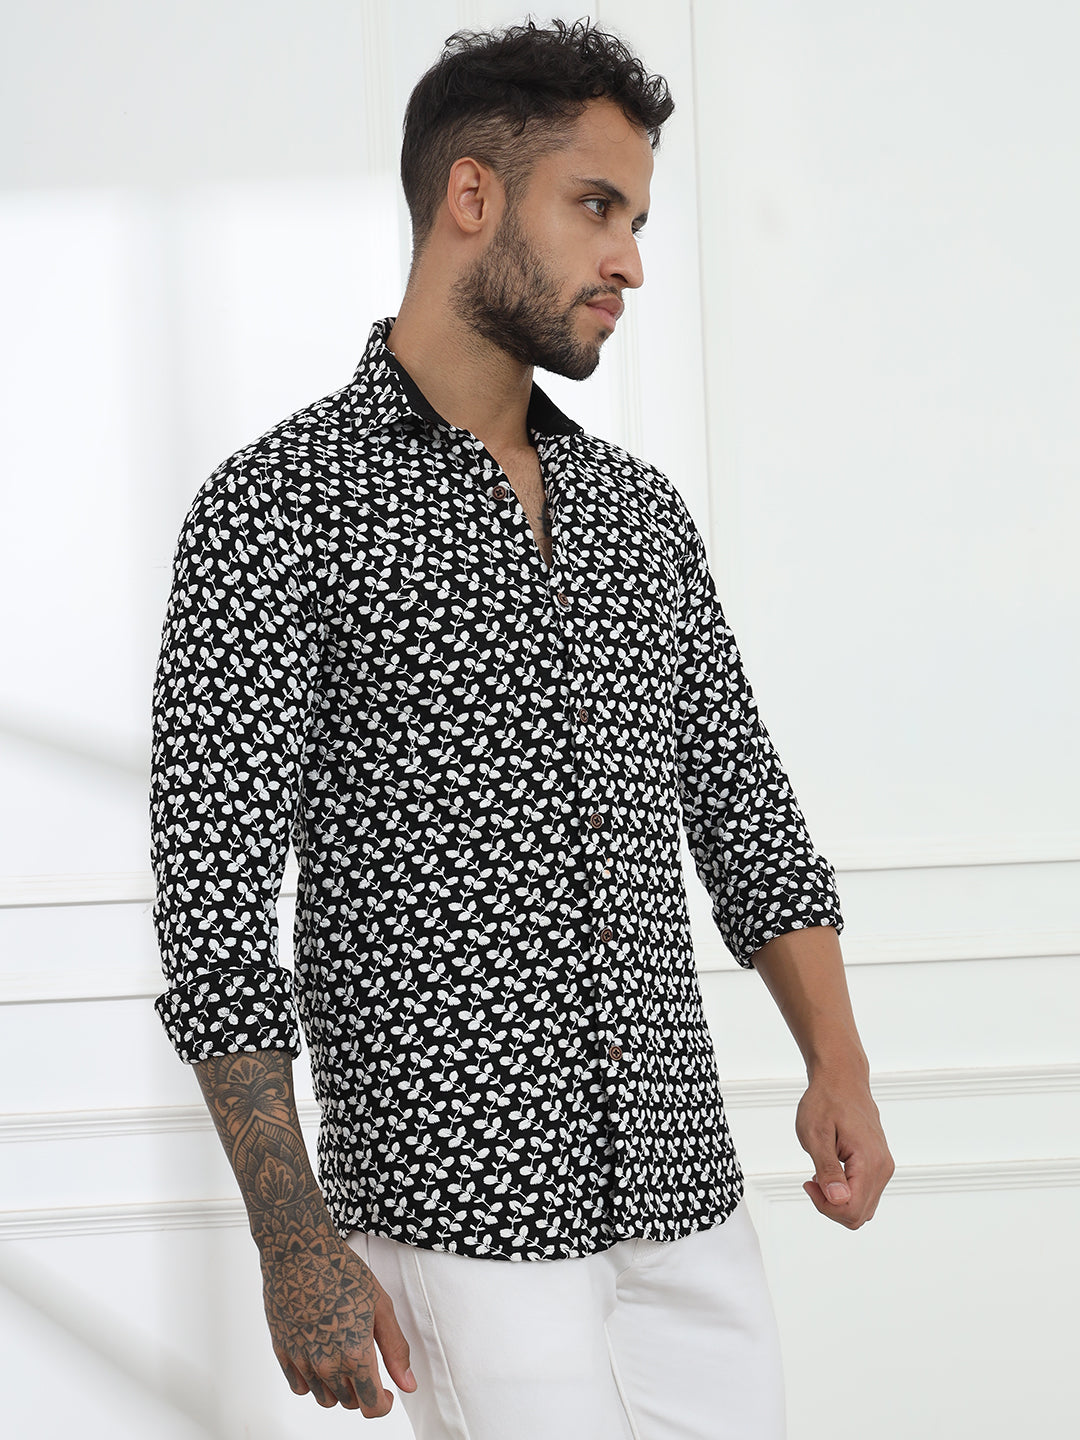 Firangi Yarn Super Soft Full Sleeves Chikankari Schiffli Embroided Men's Shirt- Black